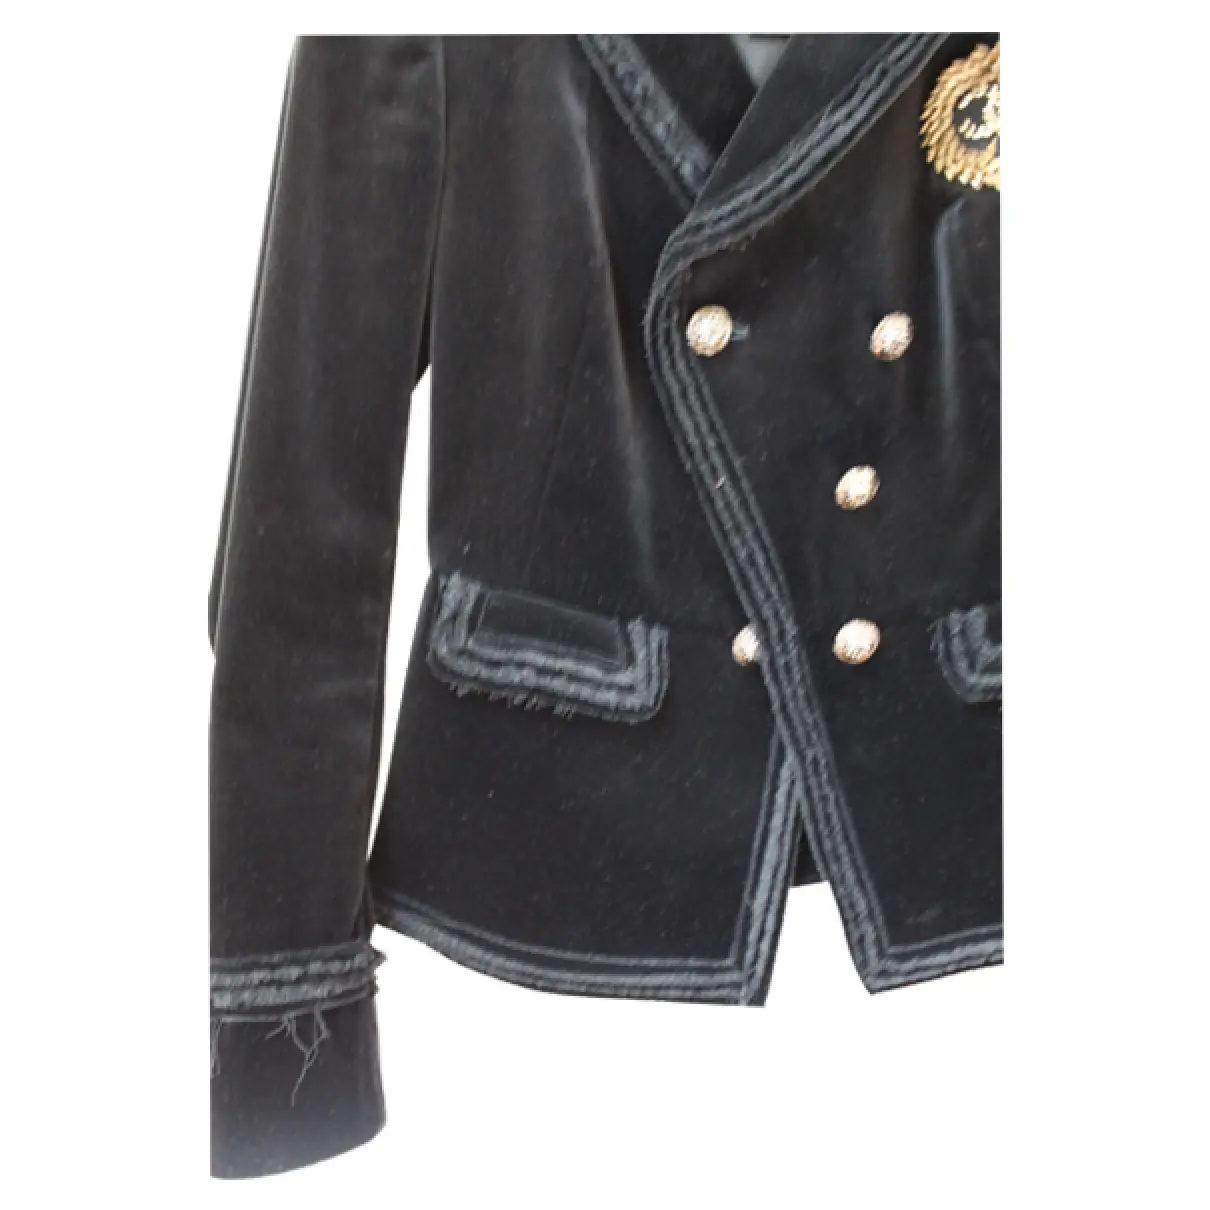 Buy Chanel Black Cotton Jacket online